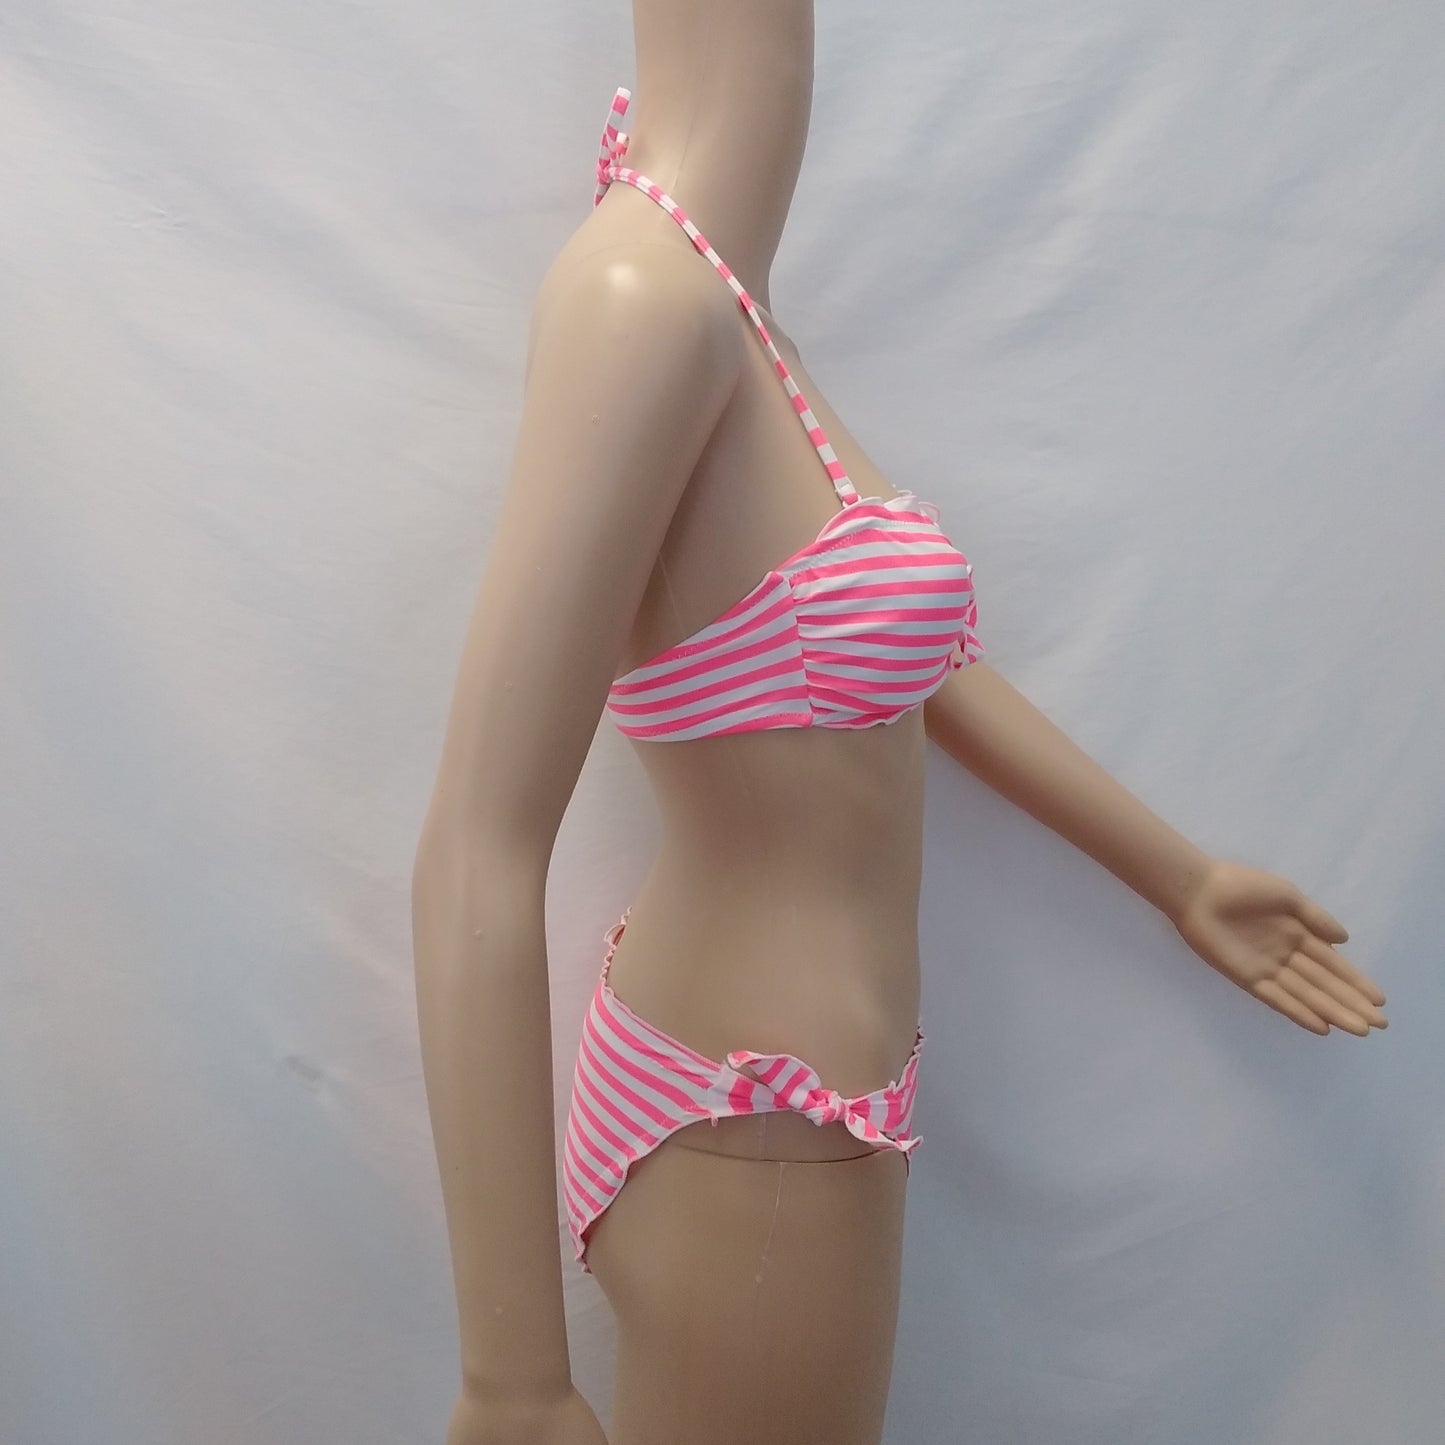 New - Old Navy Pink Striped String Bikini Swimsuit - S